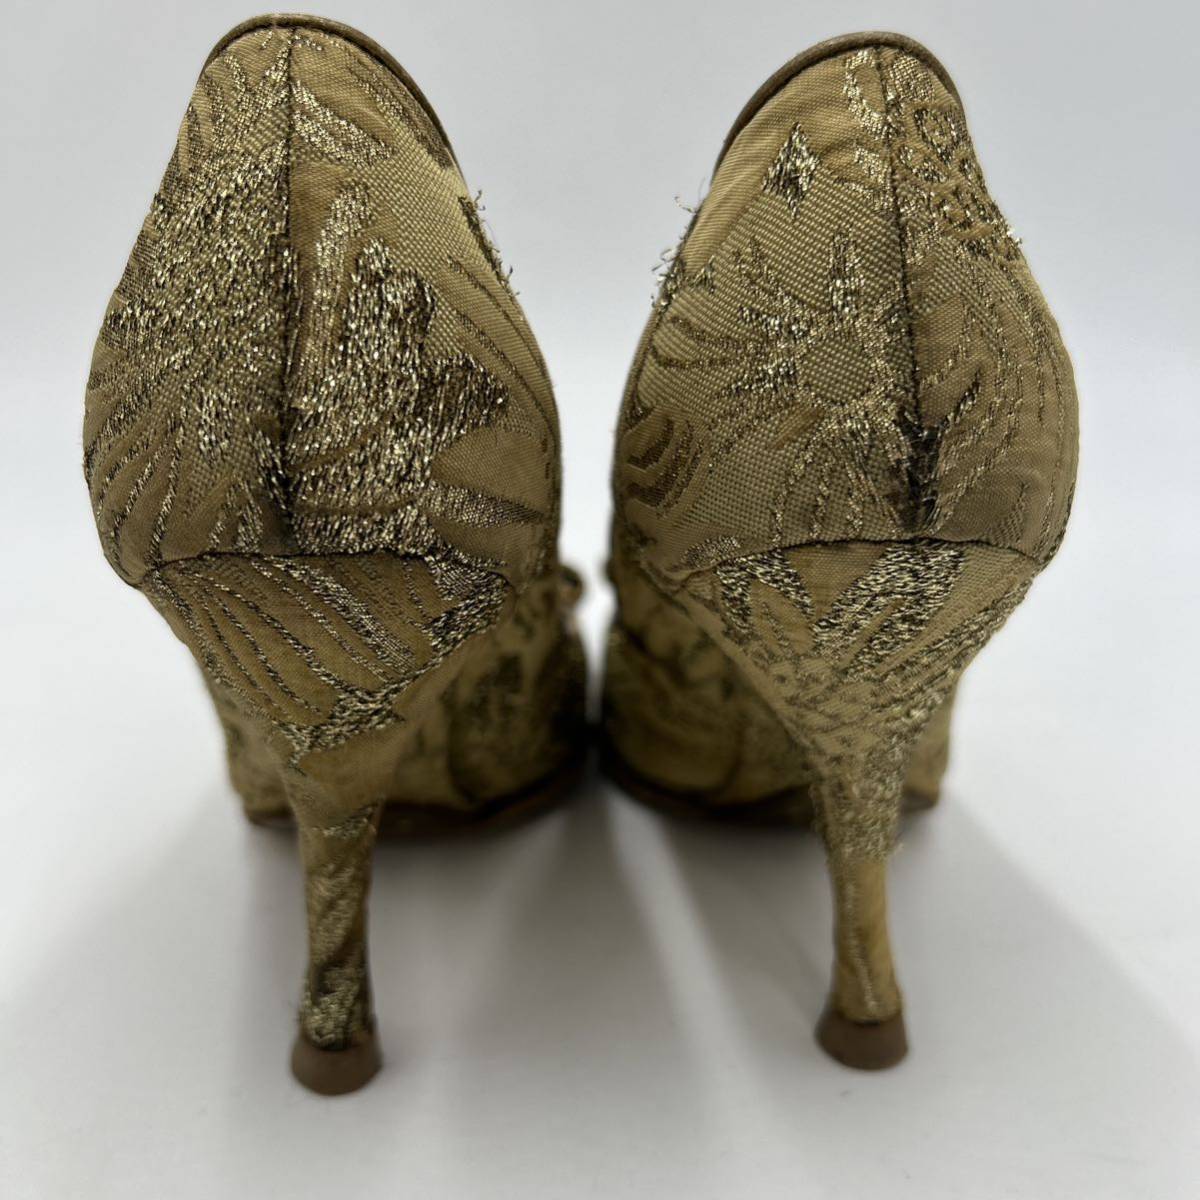 D@ 保存袋付き イタリア製 '高級ラグジュアリー靴' DOLCE&GABBANA ドルチェ&ガッバーナ 総柄 リボン付き ヒール パンプス EU35 22cm 婦人靴の画像6